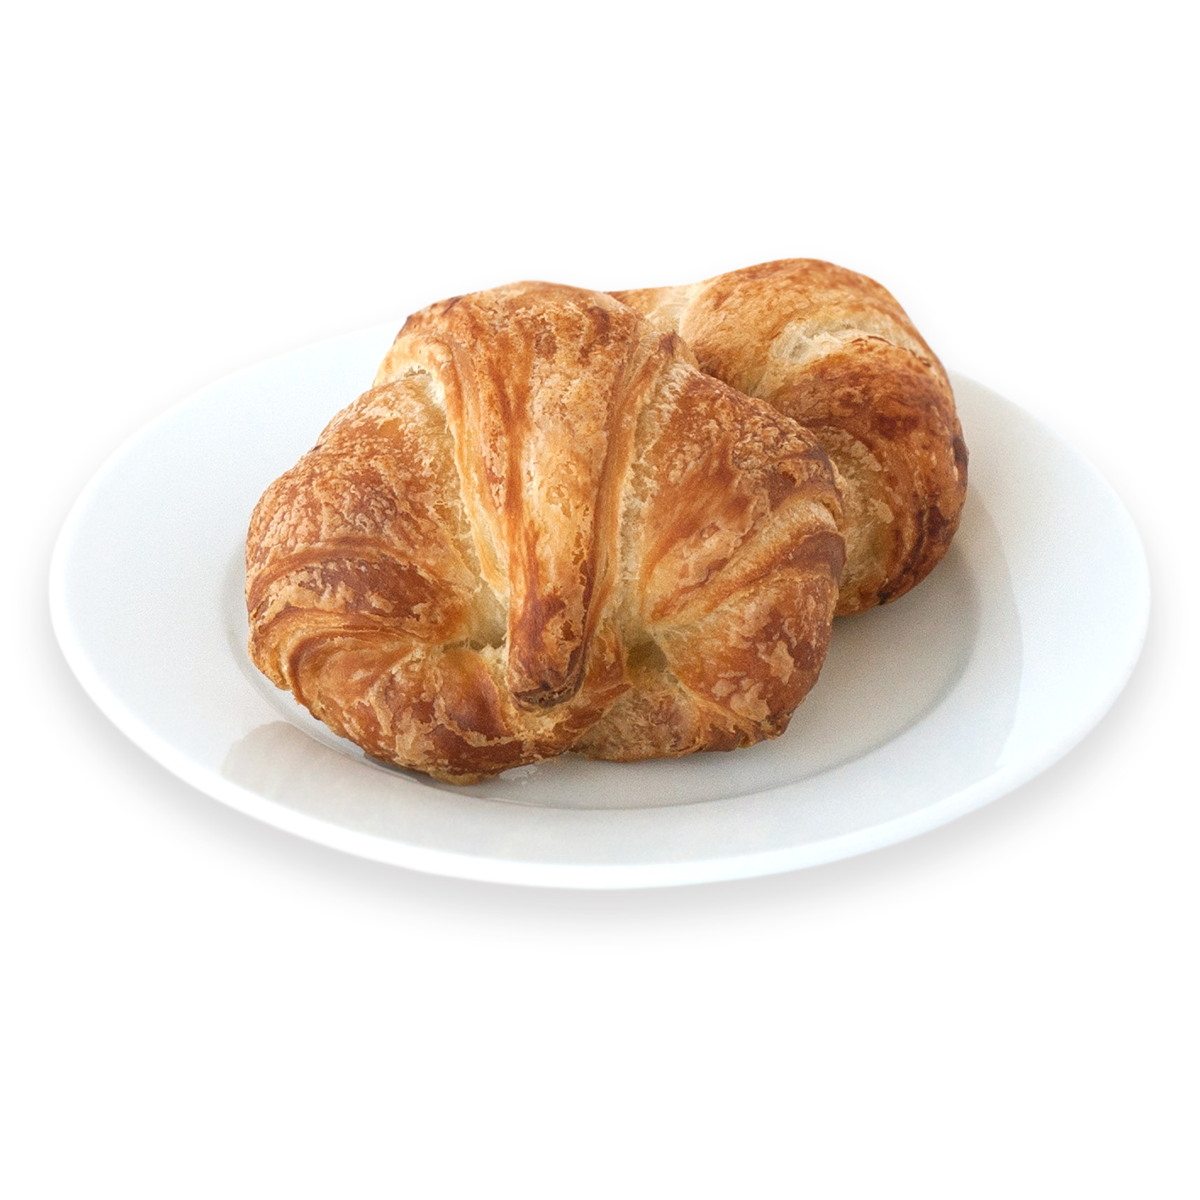 Butter Croissant oz — ifiGOURMET 3